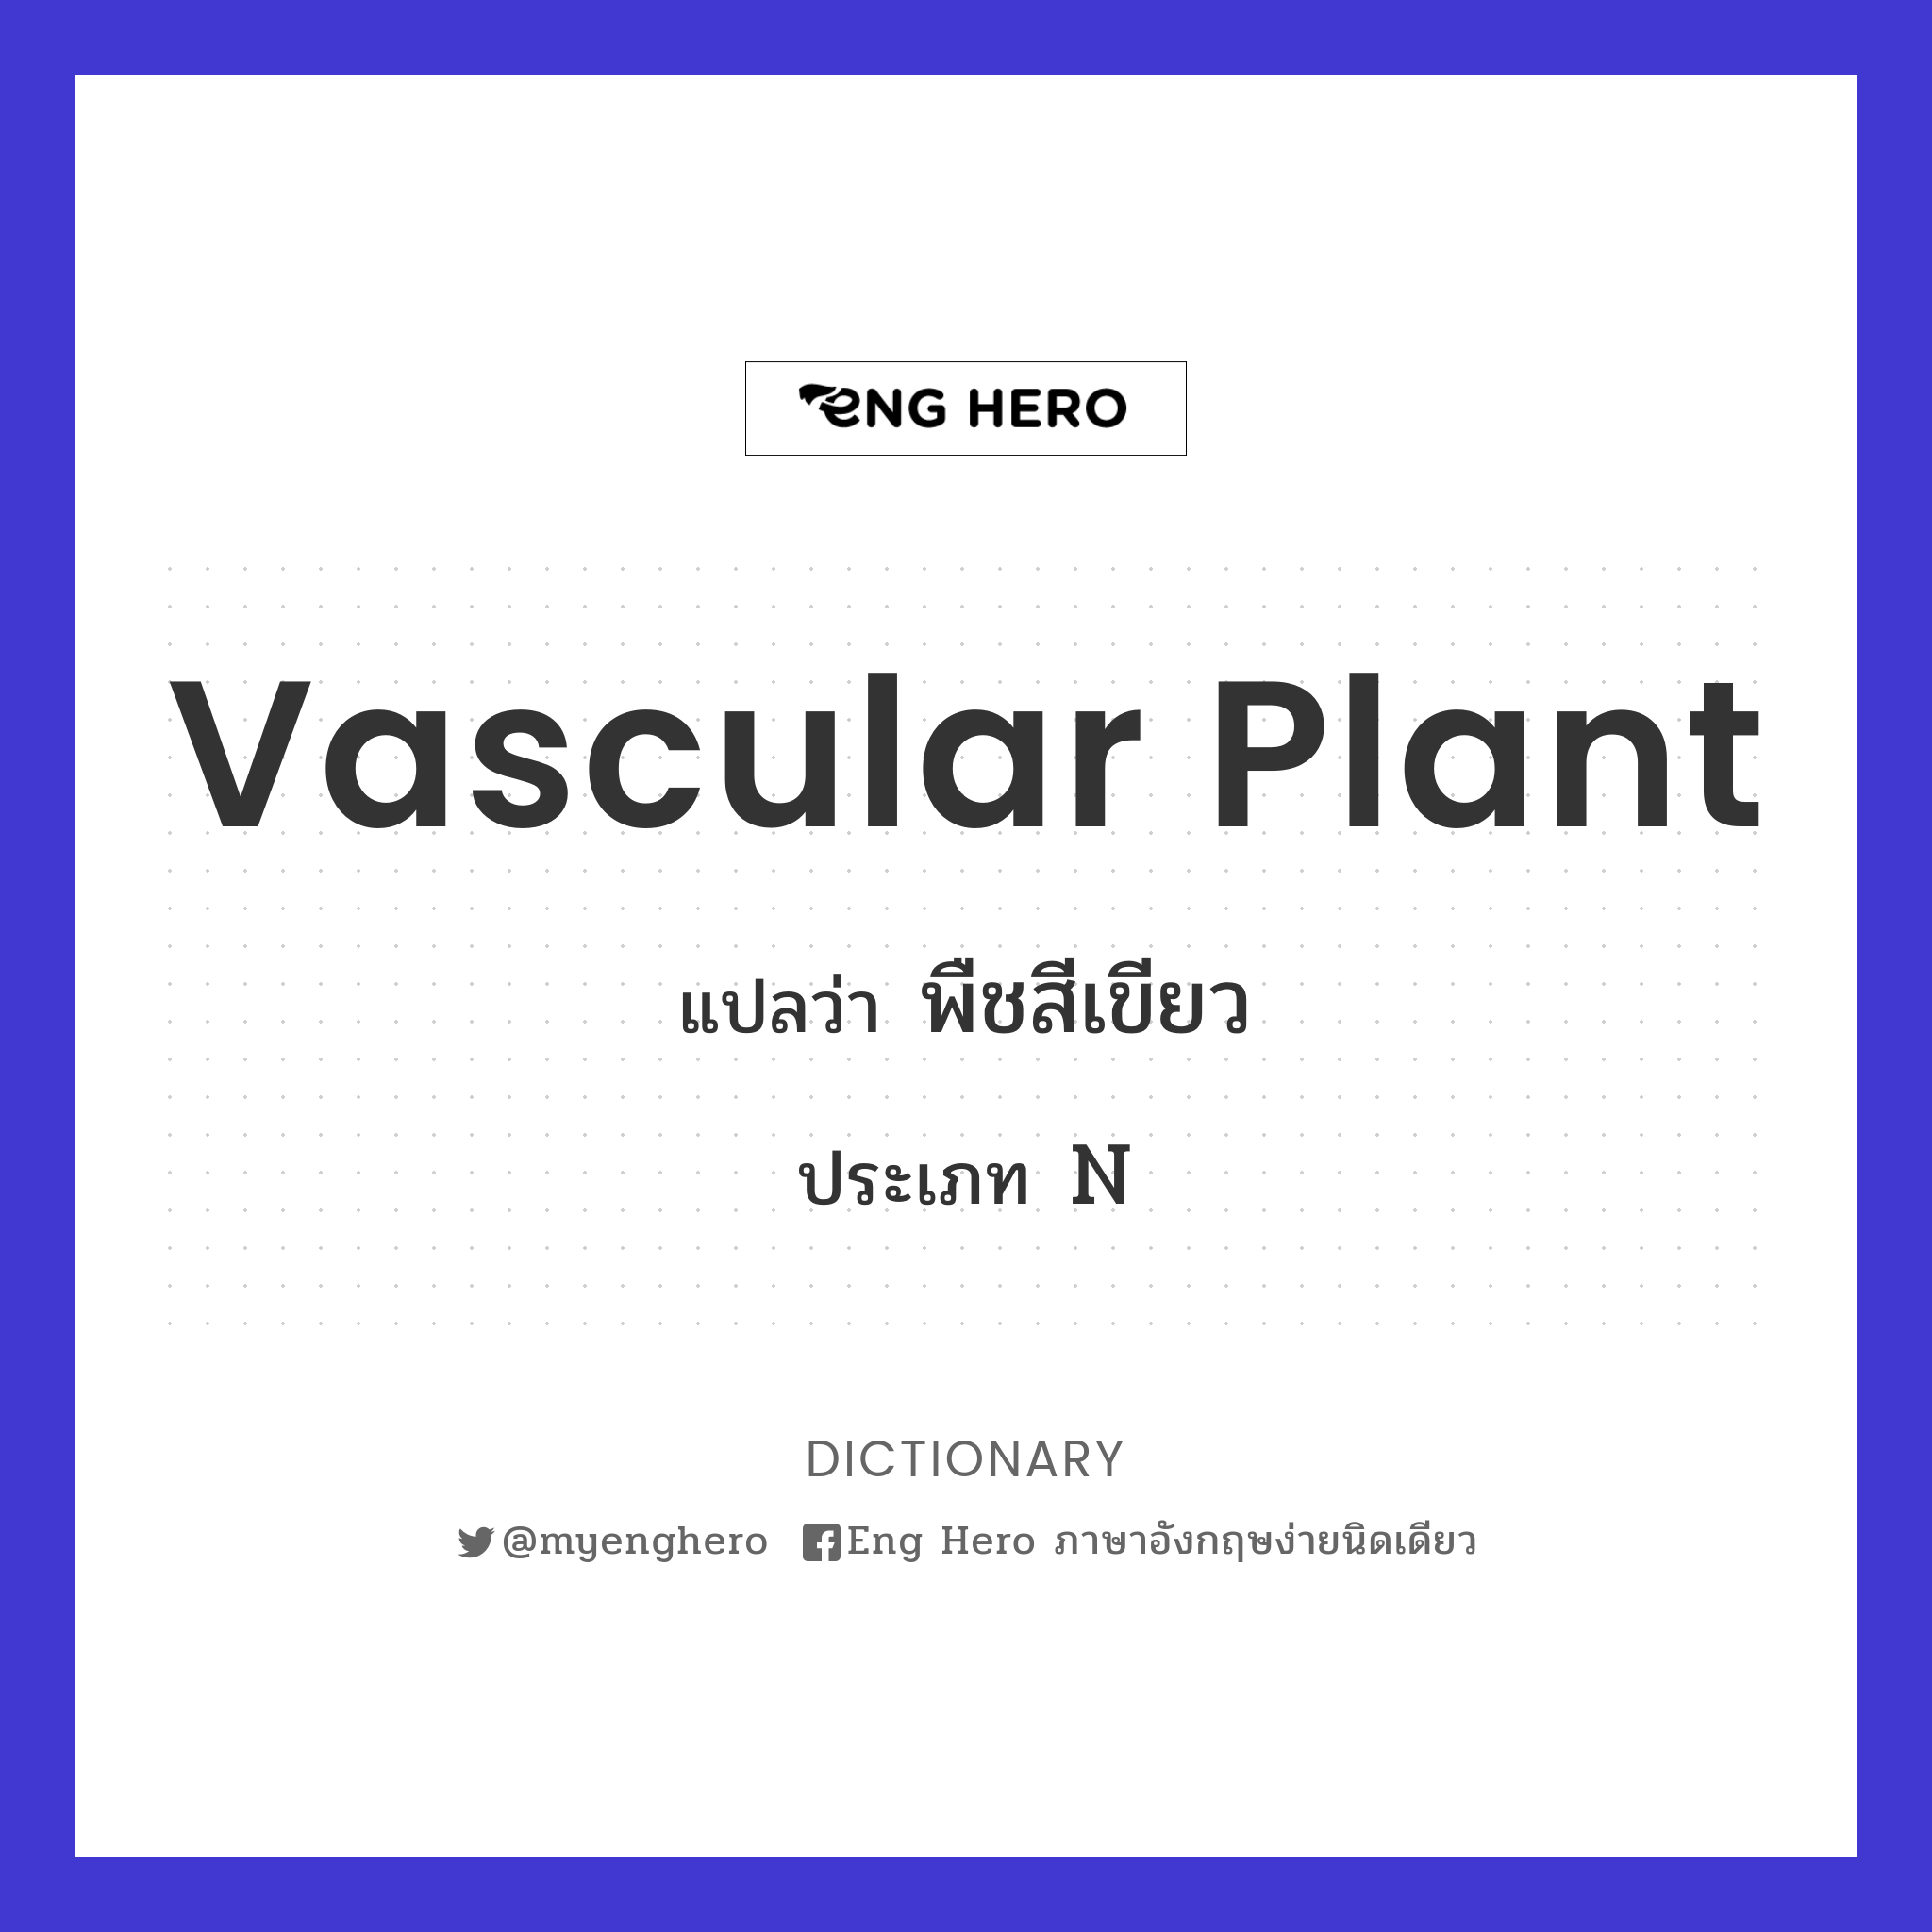 vascular plant